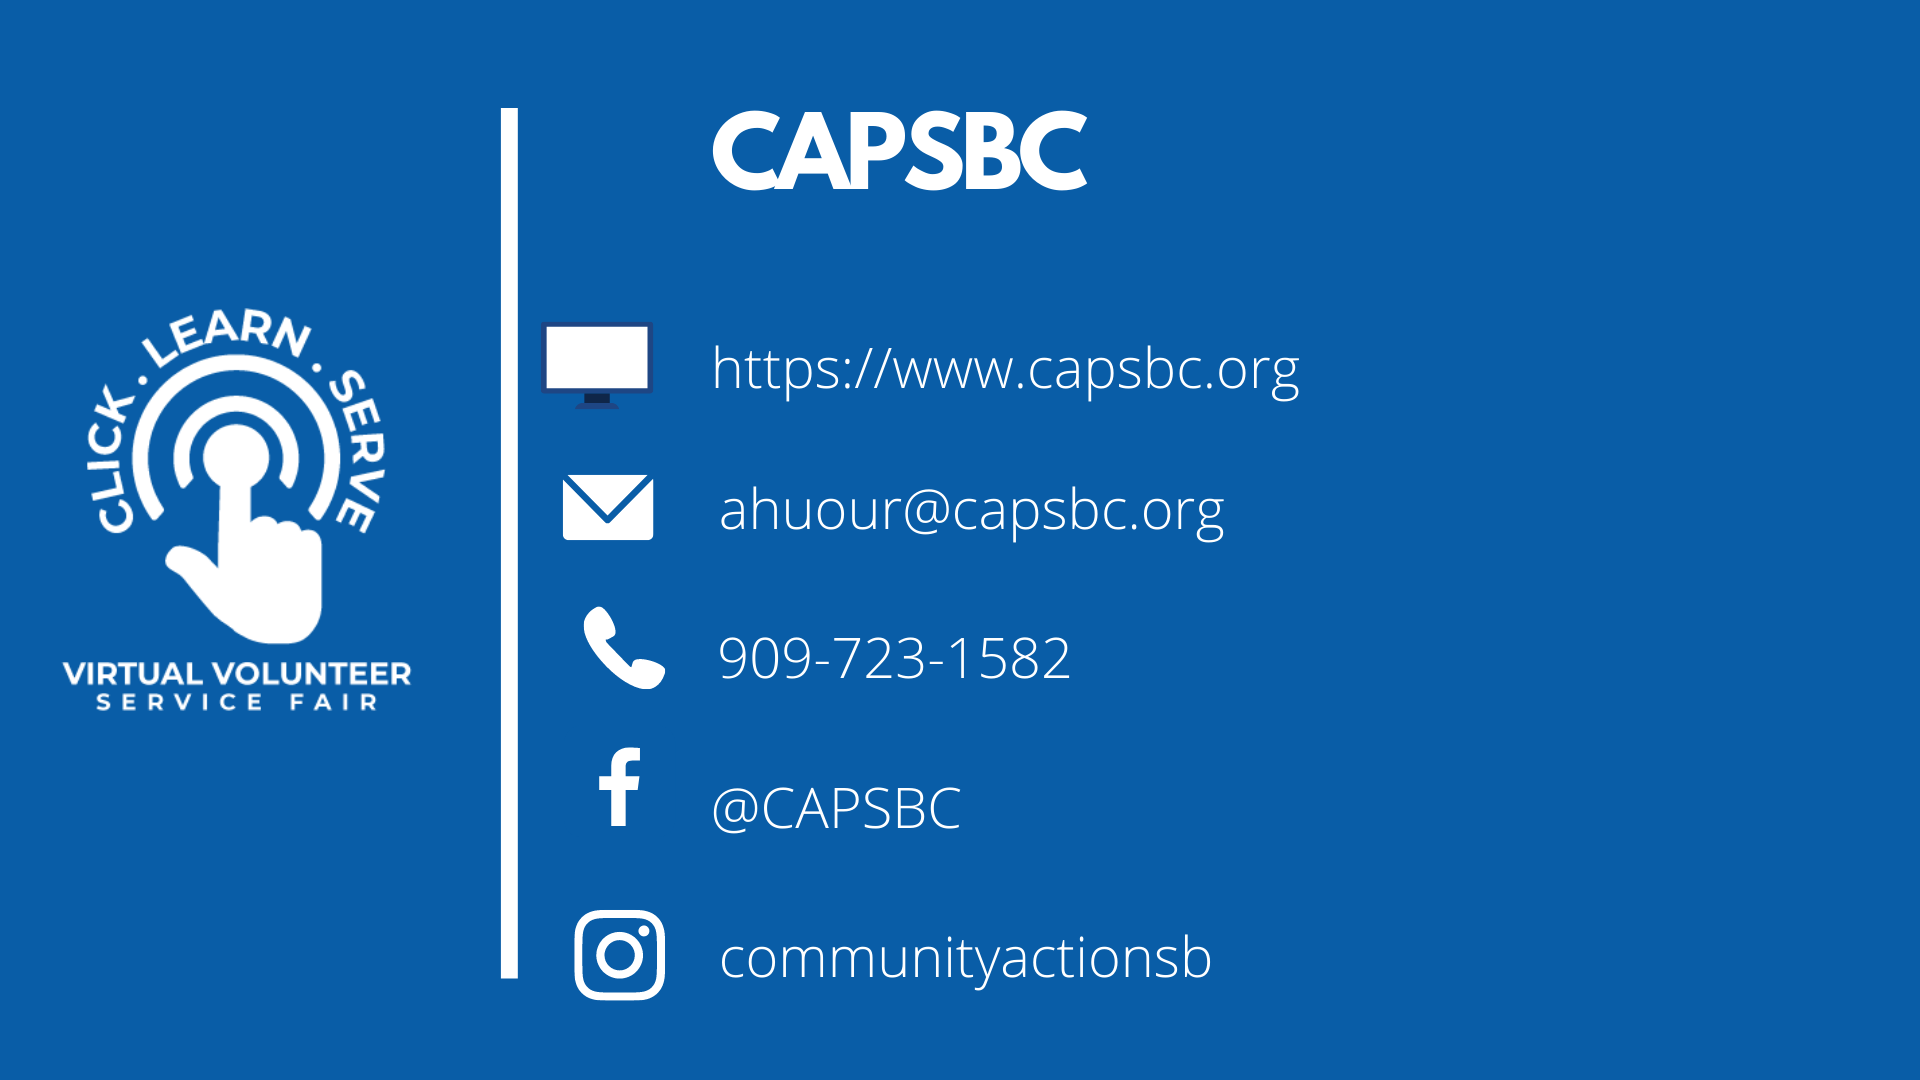 CAPSBC nonprofit video for Click.Learn.Serve. Virtual Volunteer Service Fair.